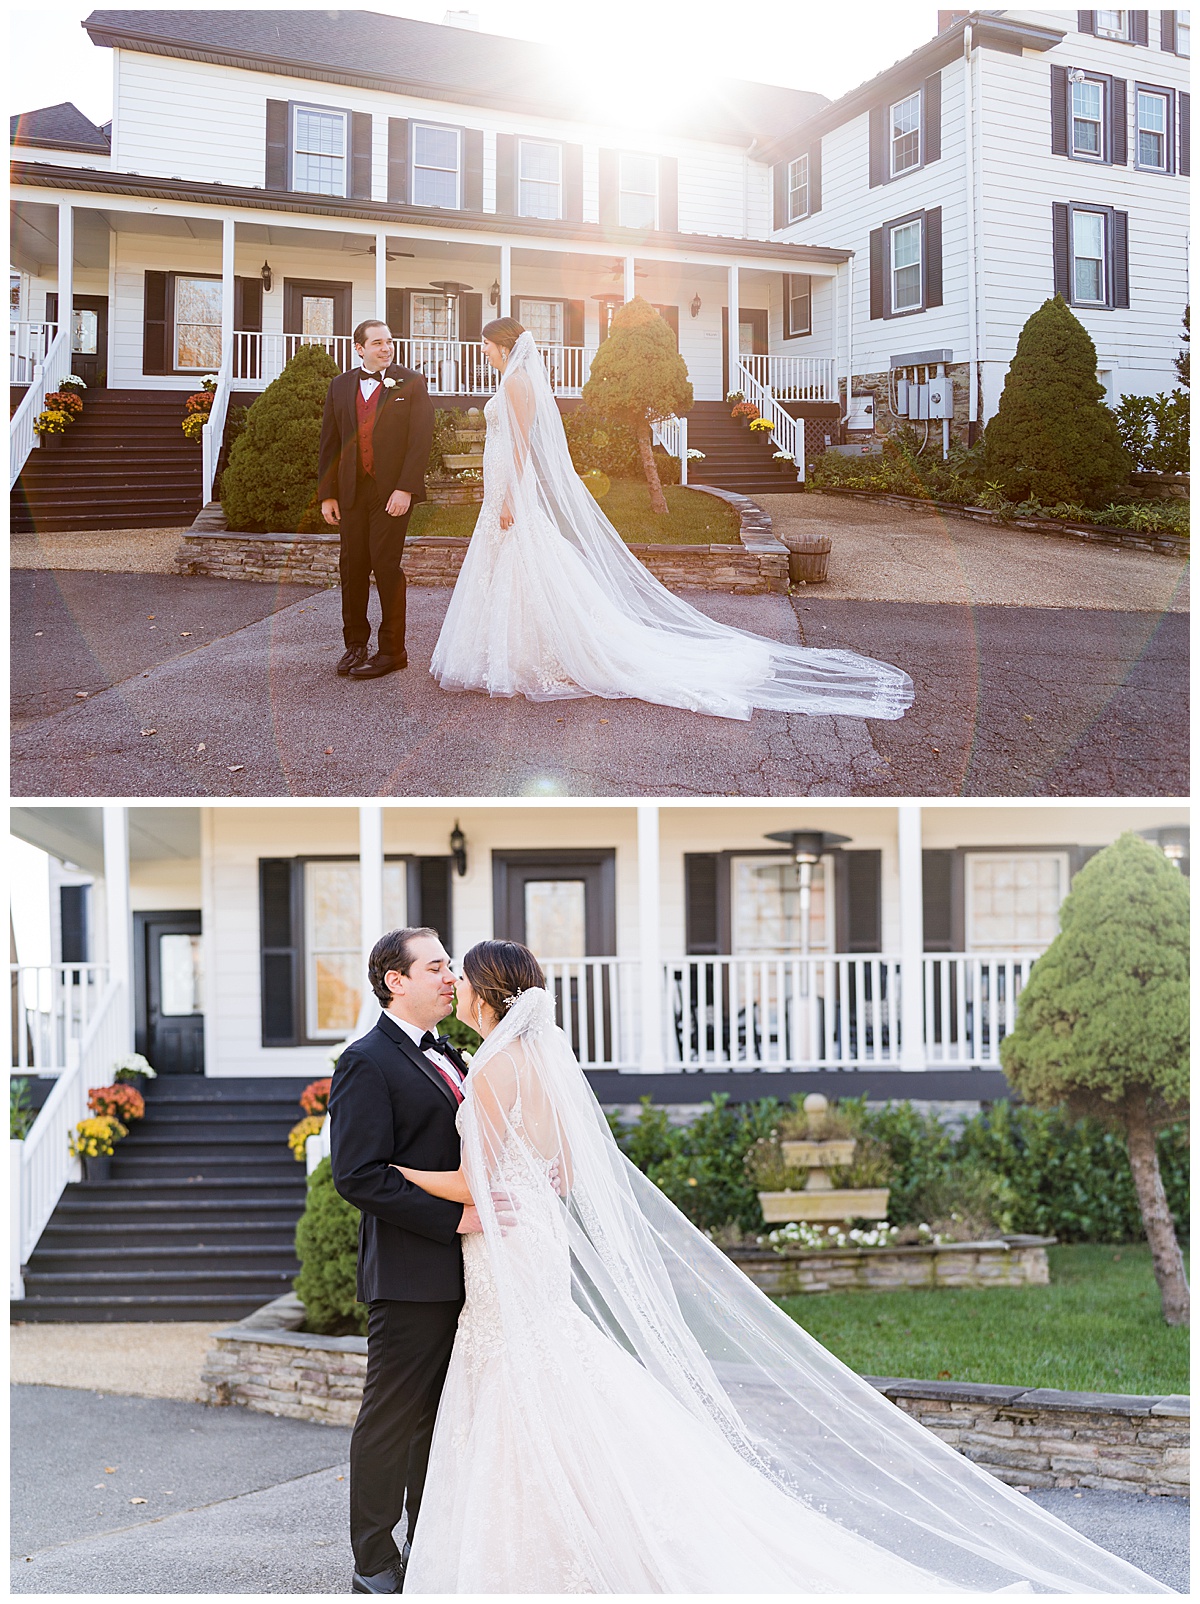 Stefanie Kamerman Photography - Jen and Matt - A Blush and Burgandy Themed Wedding - Manor at Airmont, Round Hill, Virginia_0029.jpg